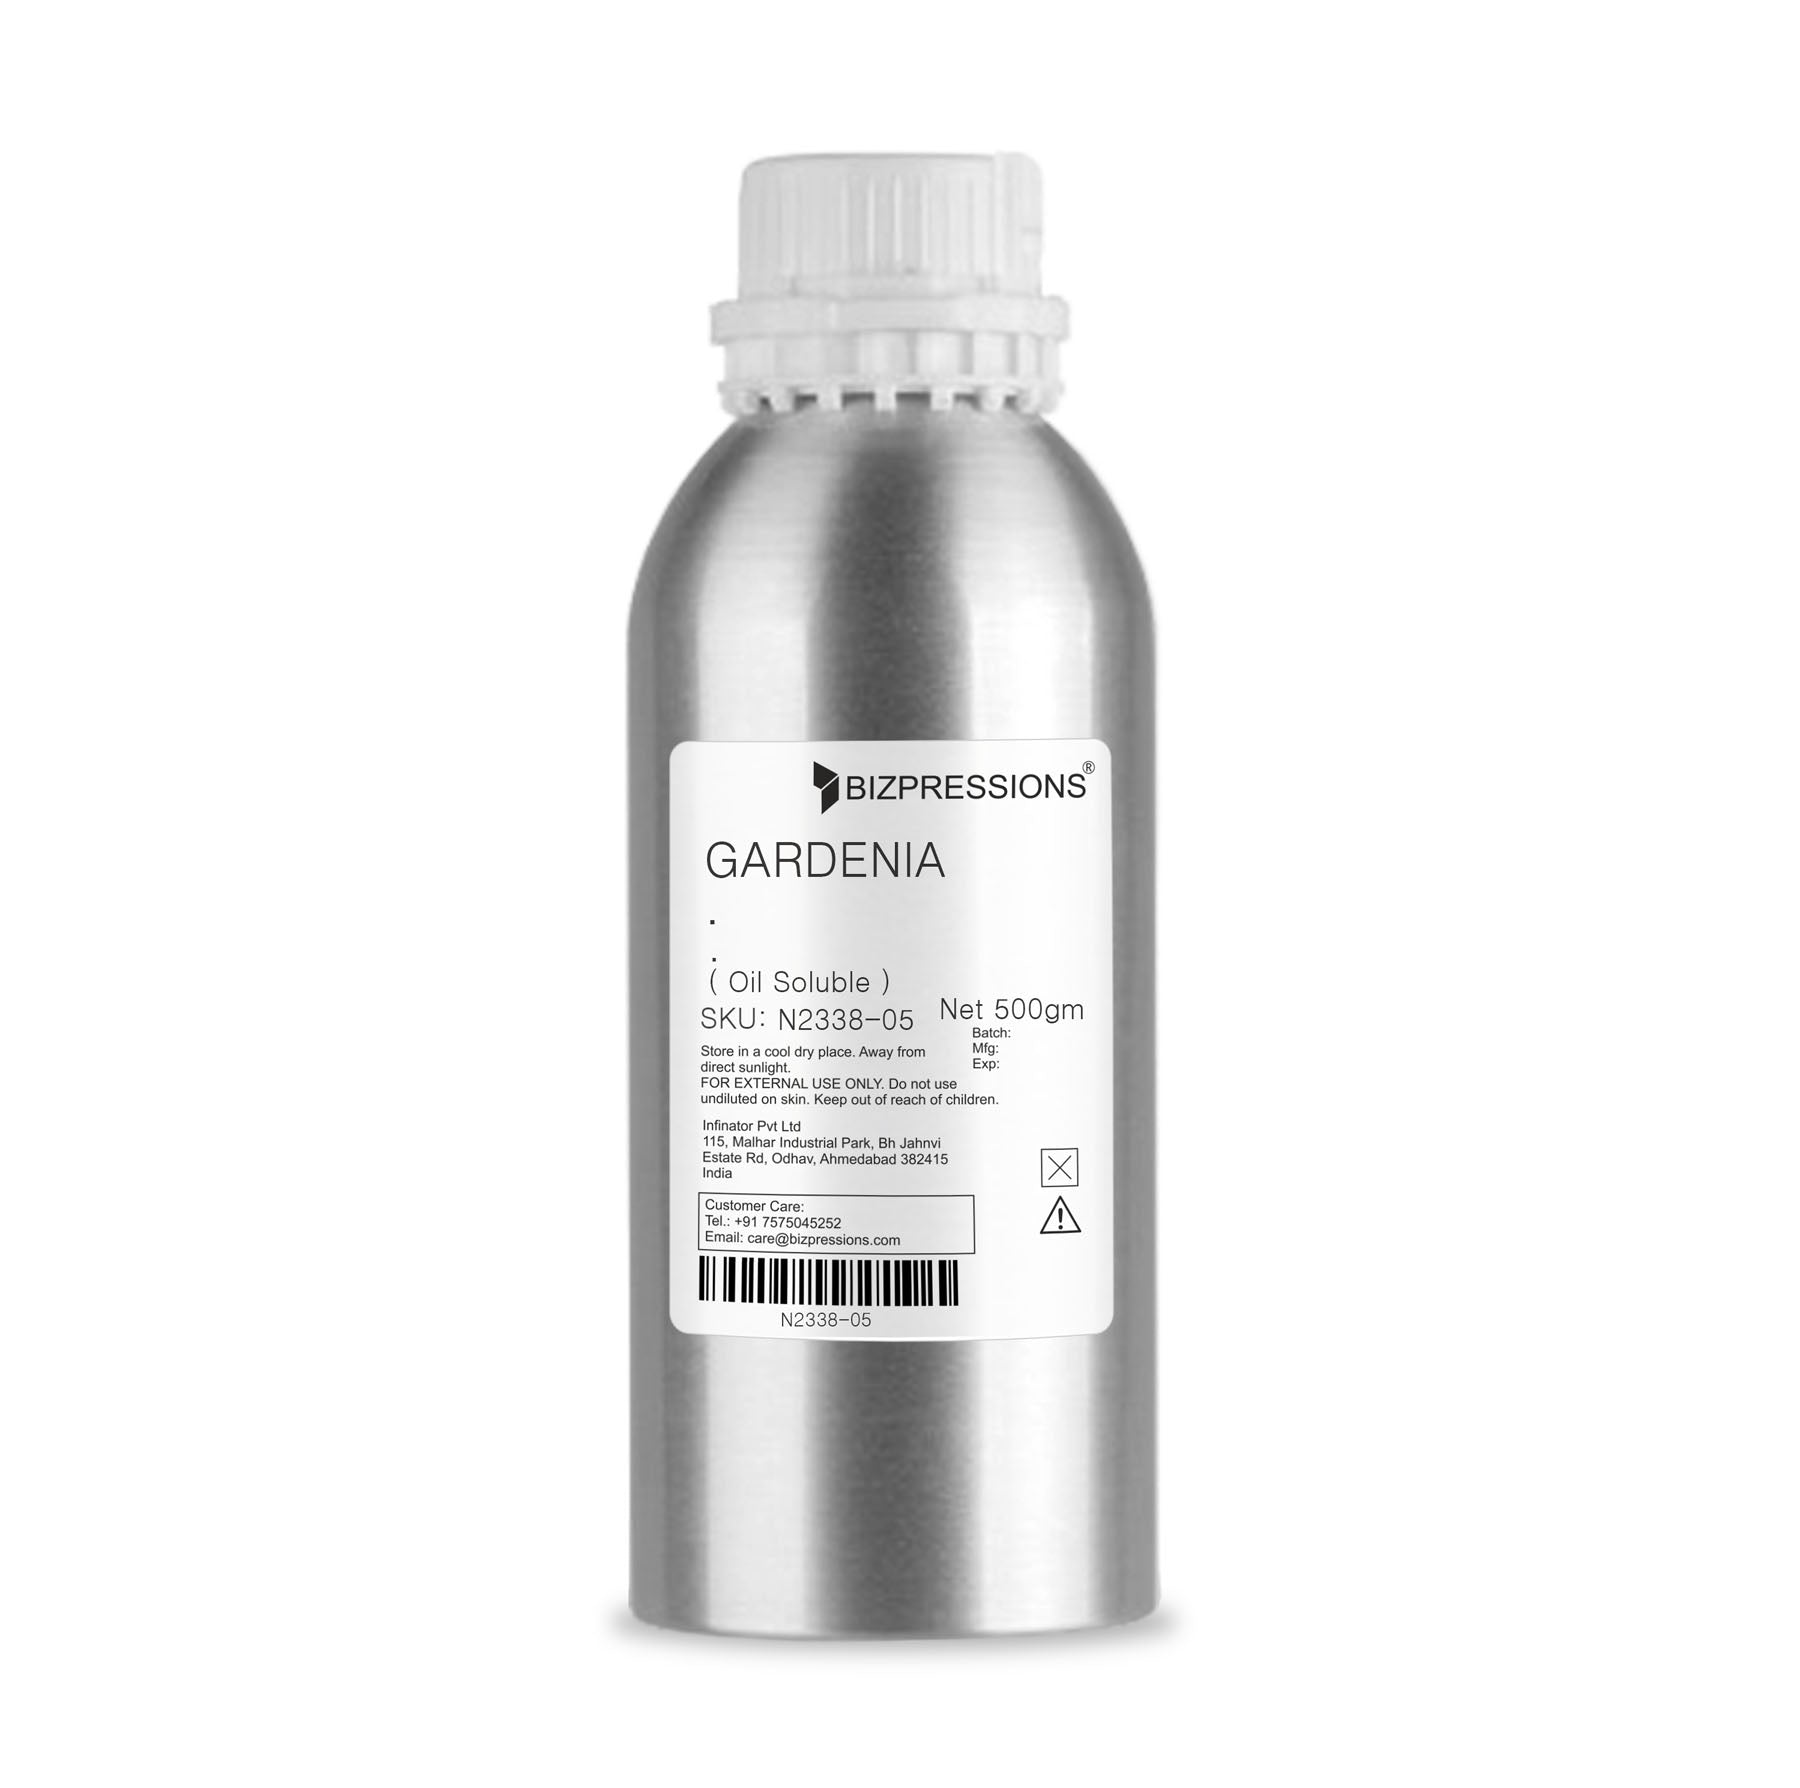 GARDENIA - Fragrance ( Oil Soluble ) - 500 gm